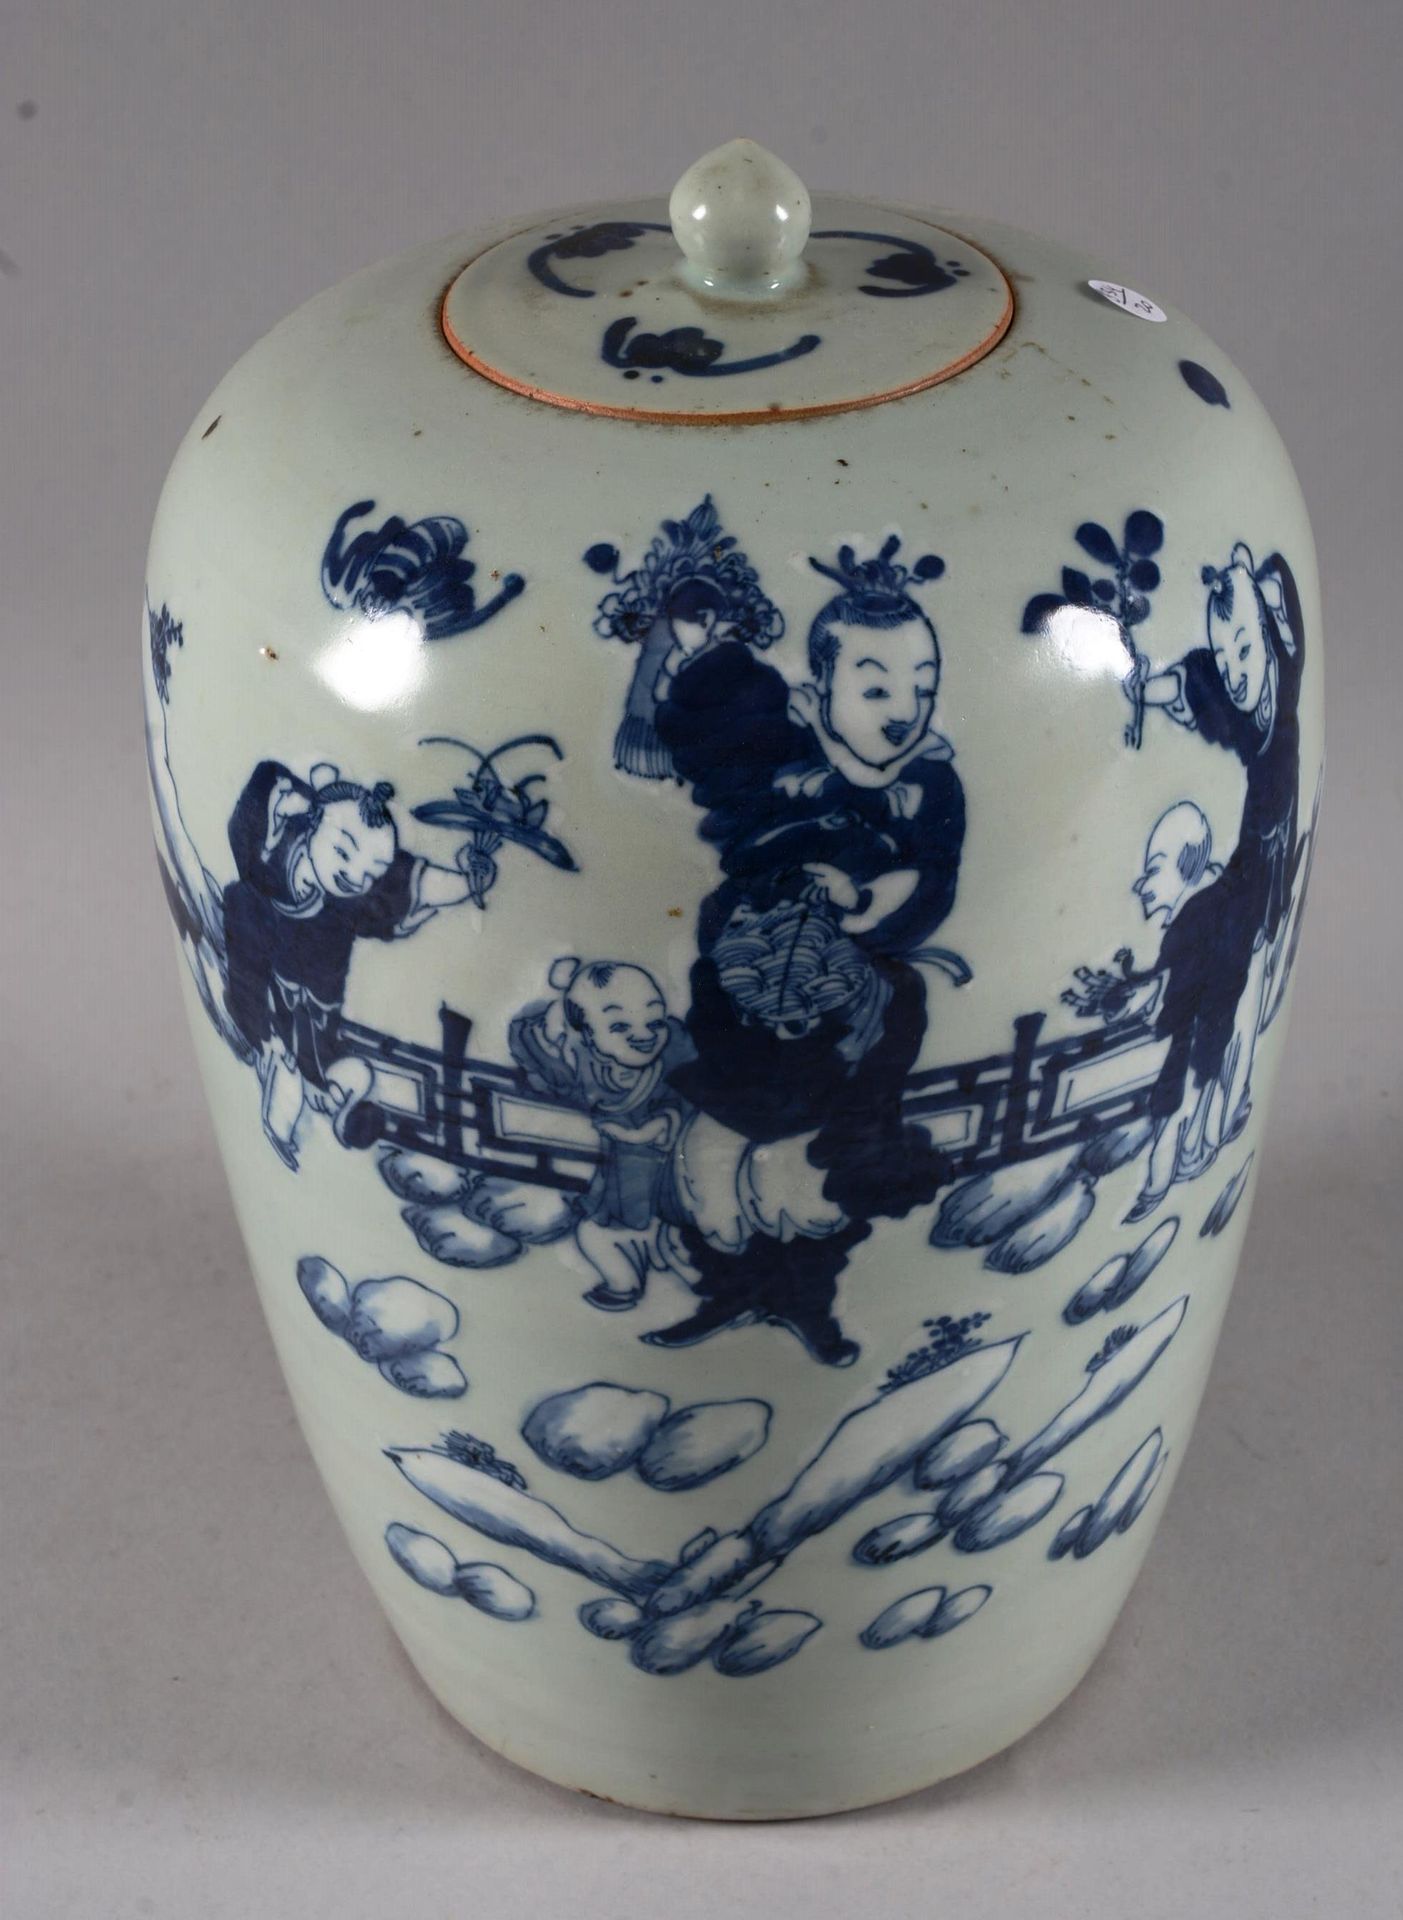 Grand pot à gingembre couvert 中国。

中国瓷器中的大盖姜罐，青花瓷背景上的蓝字。约1920/1930年。

高：31.5厘米